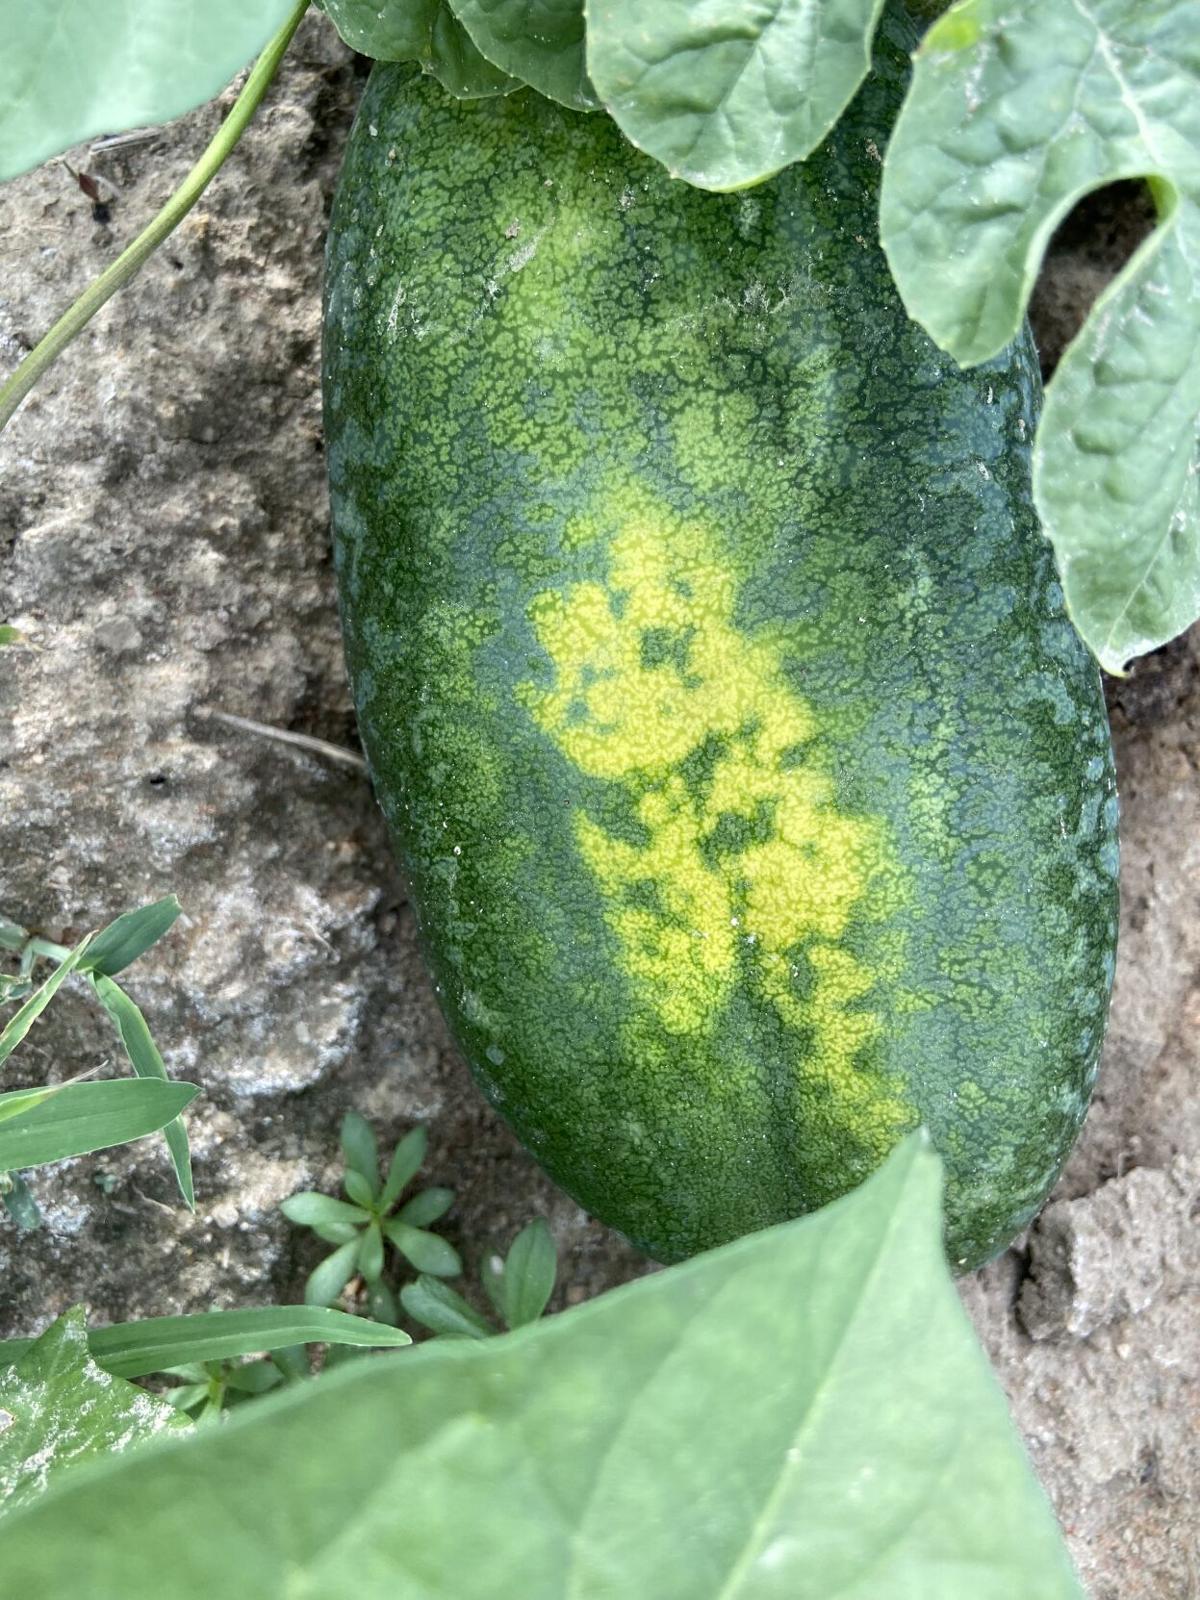 Southern Cinch Crop Top - Watermelon